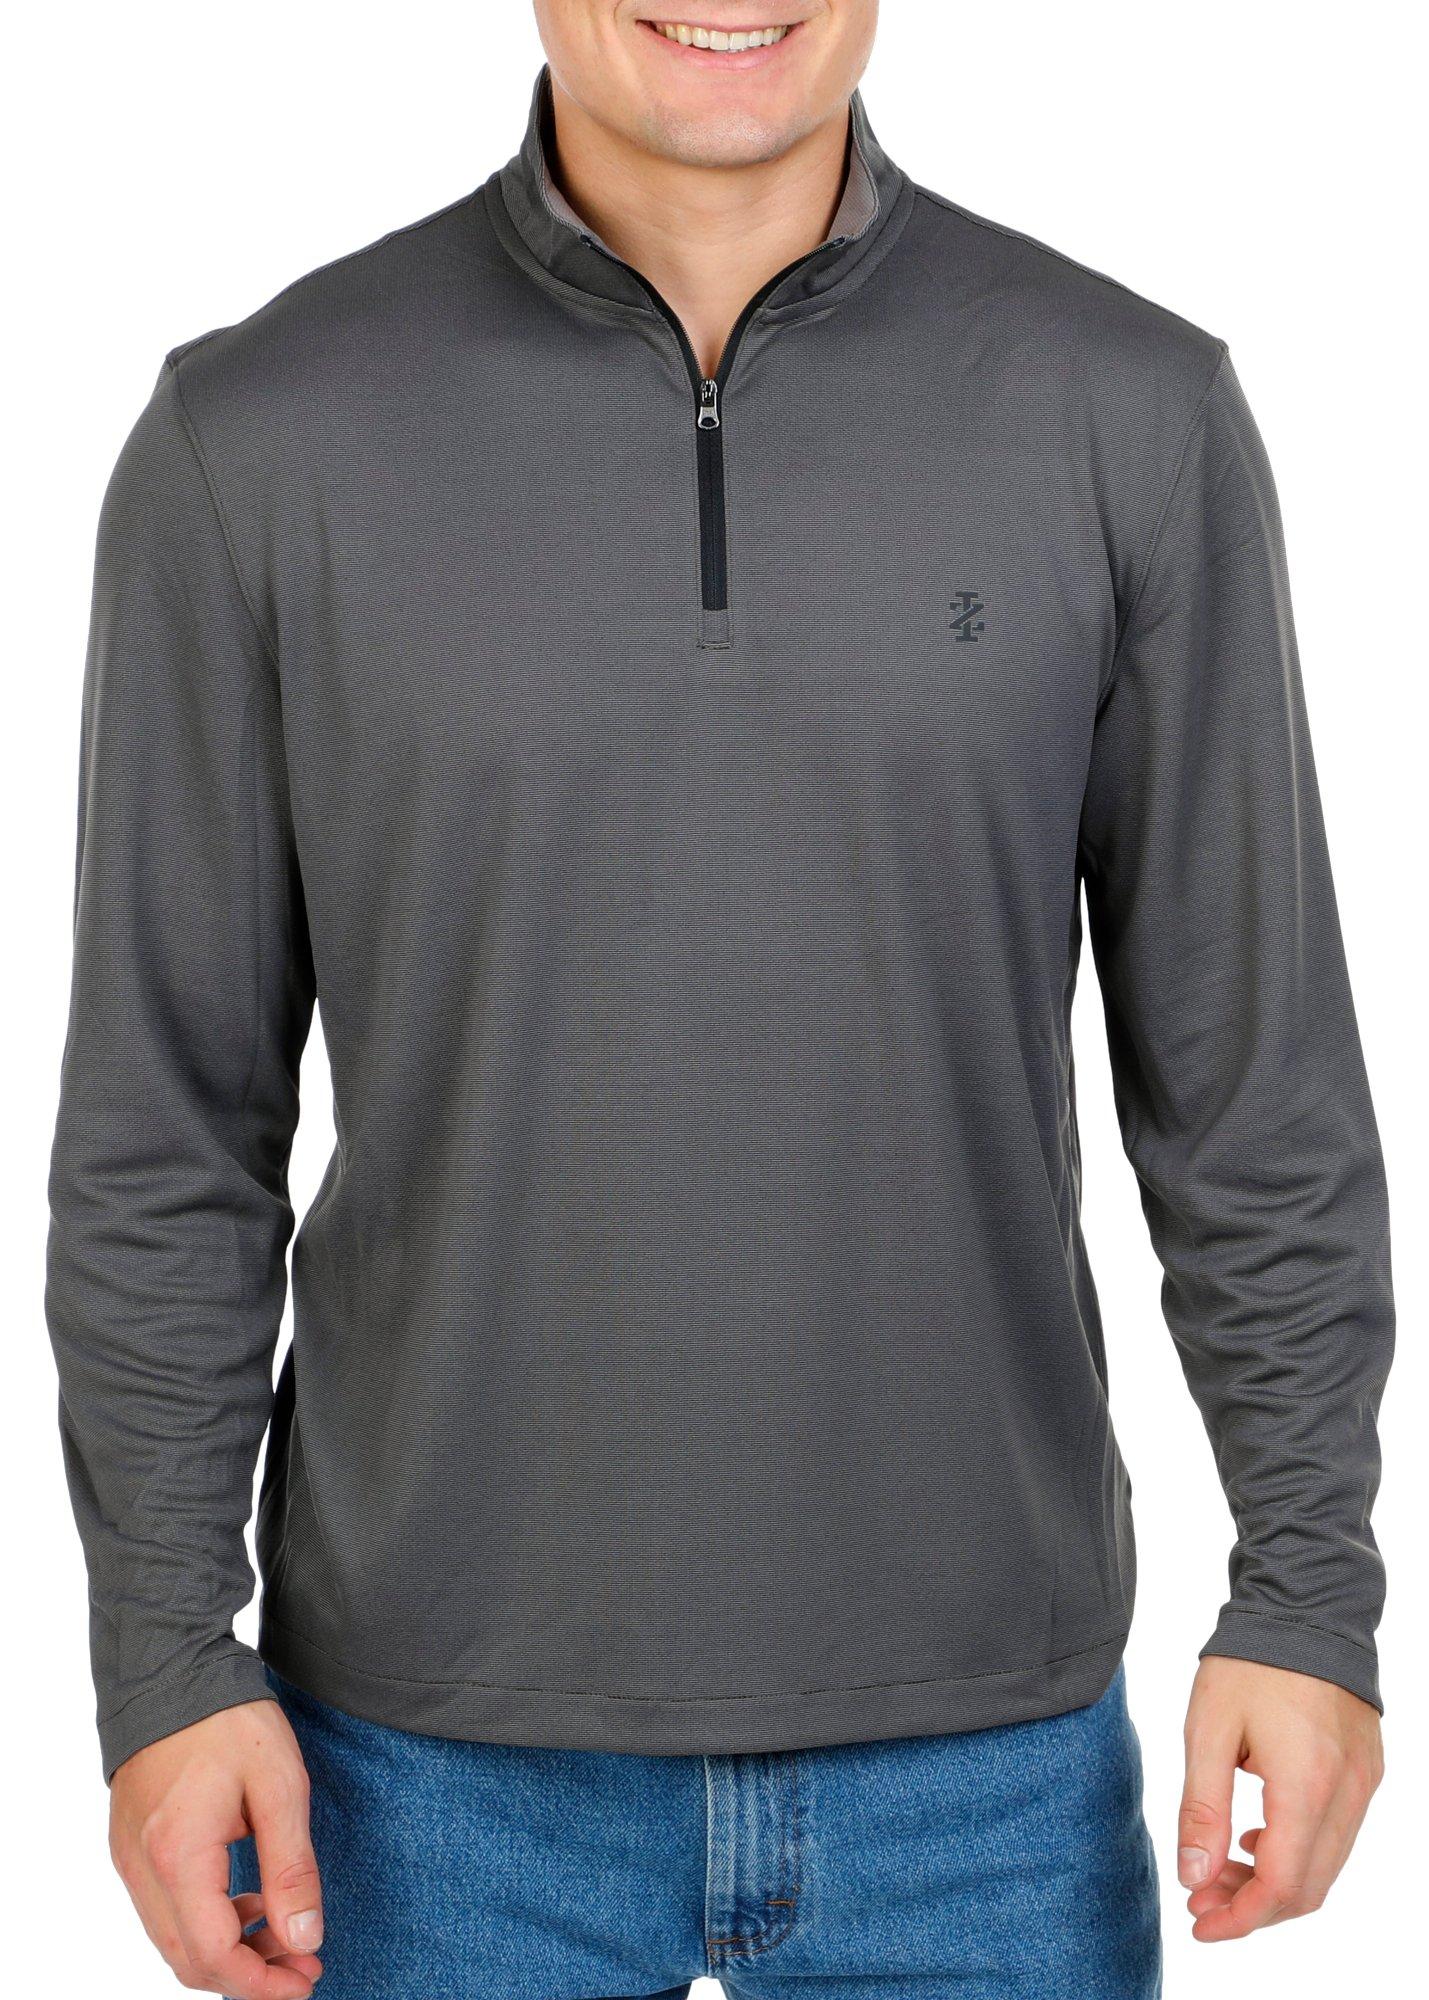 Men's Solid Long Sleeve Quarter Zip Shirt - Grey